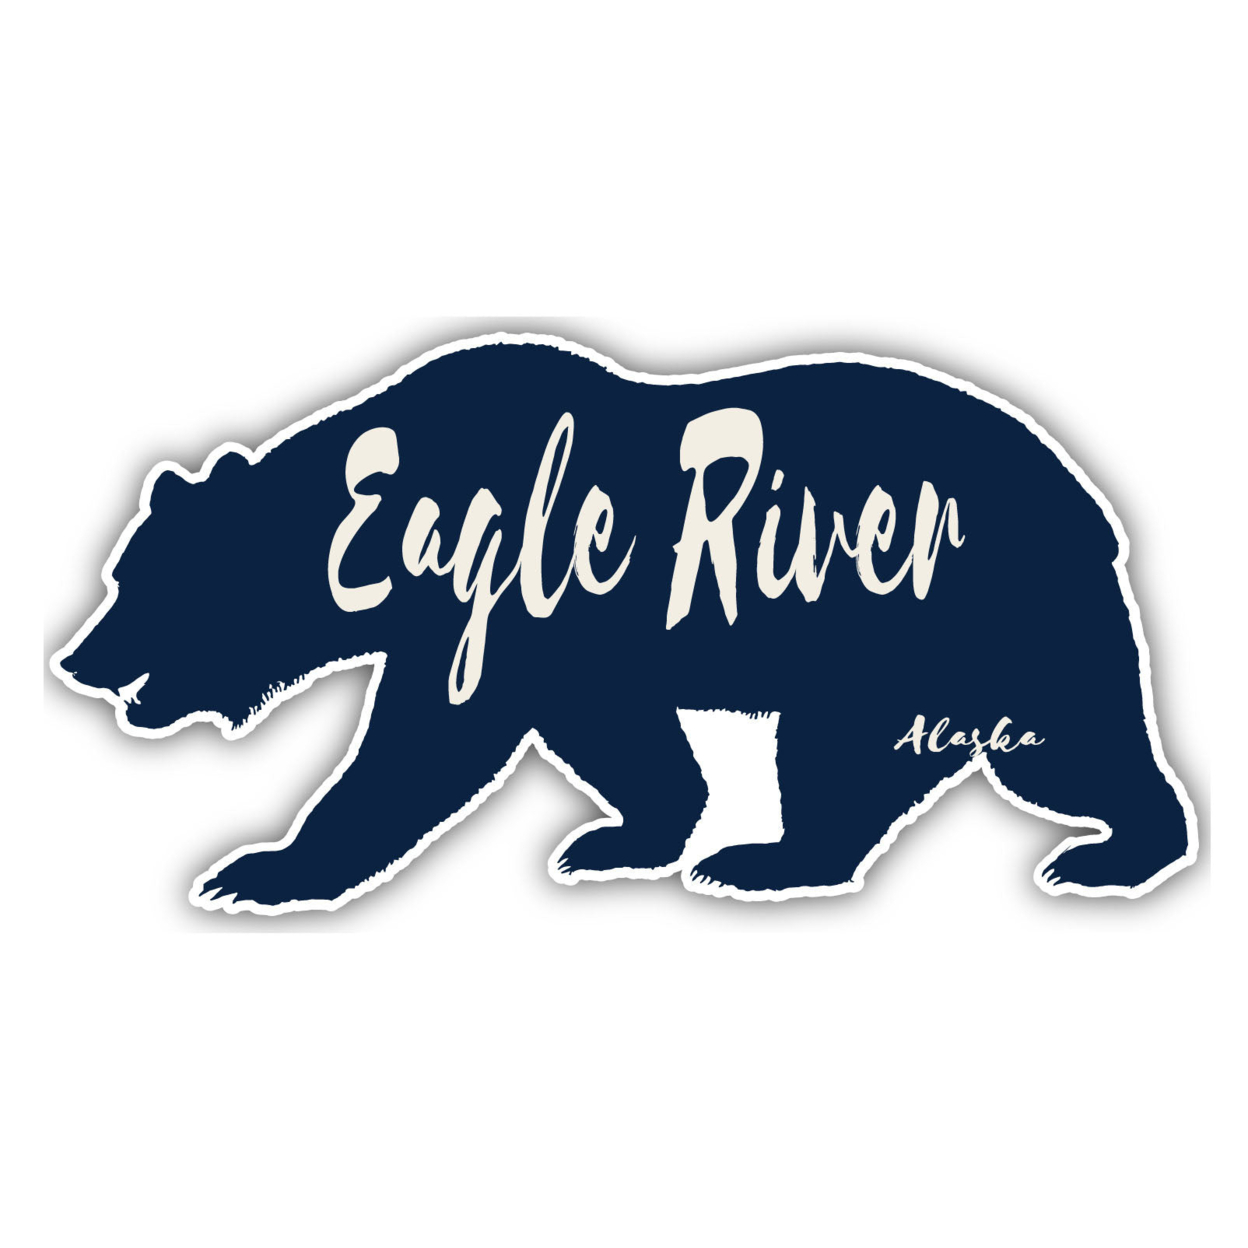 Eagle River Alaska Souvenir Decorative Stickers (Choose Theme And Size) - Single Unit, 4-Inch, Adventures Awaits